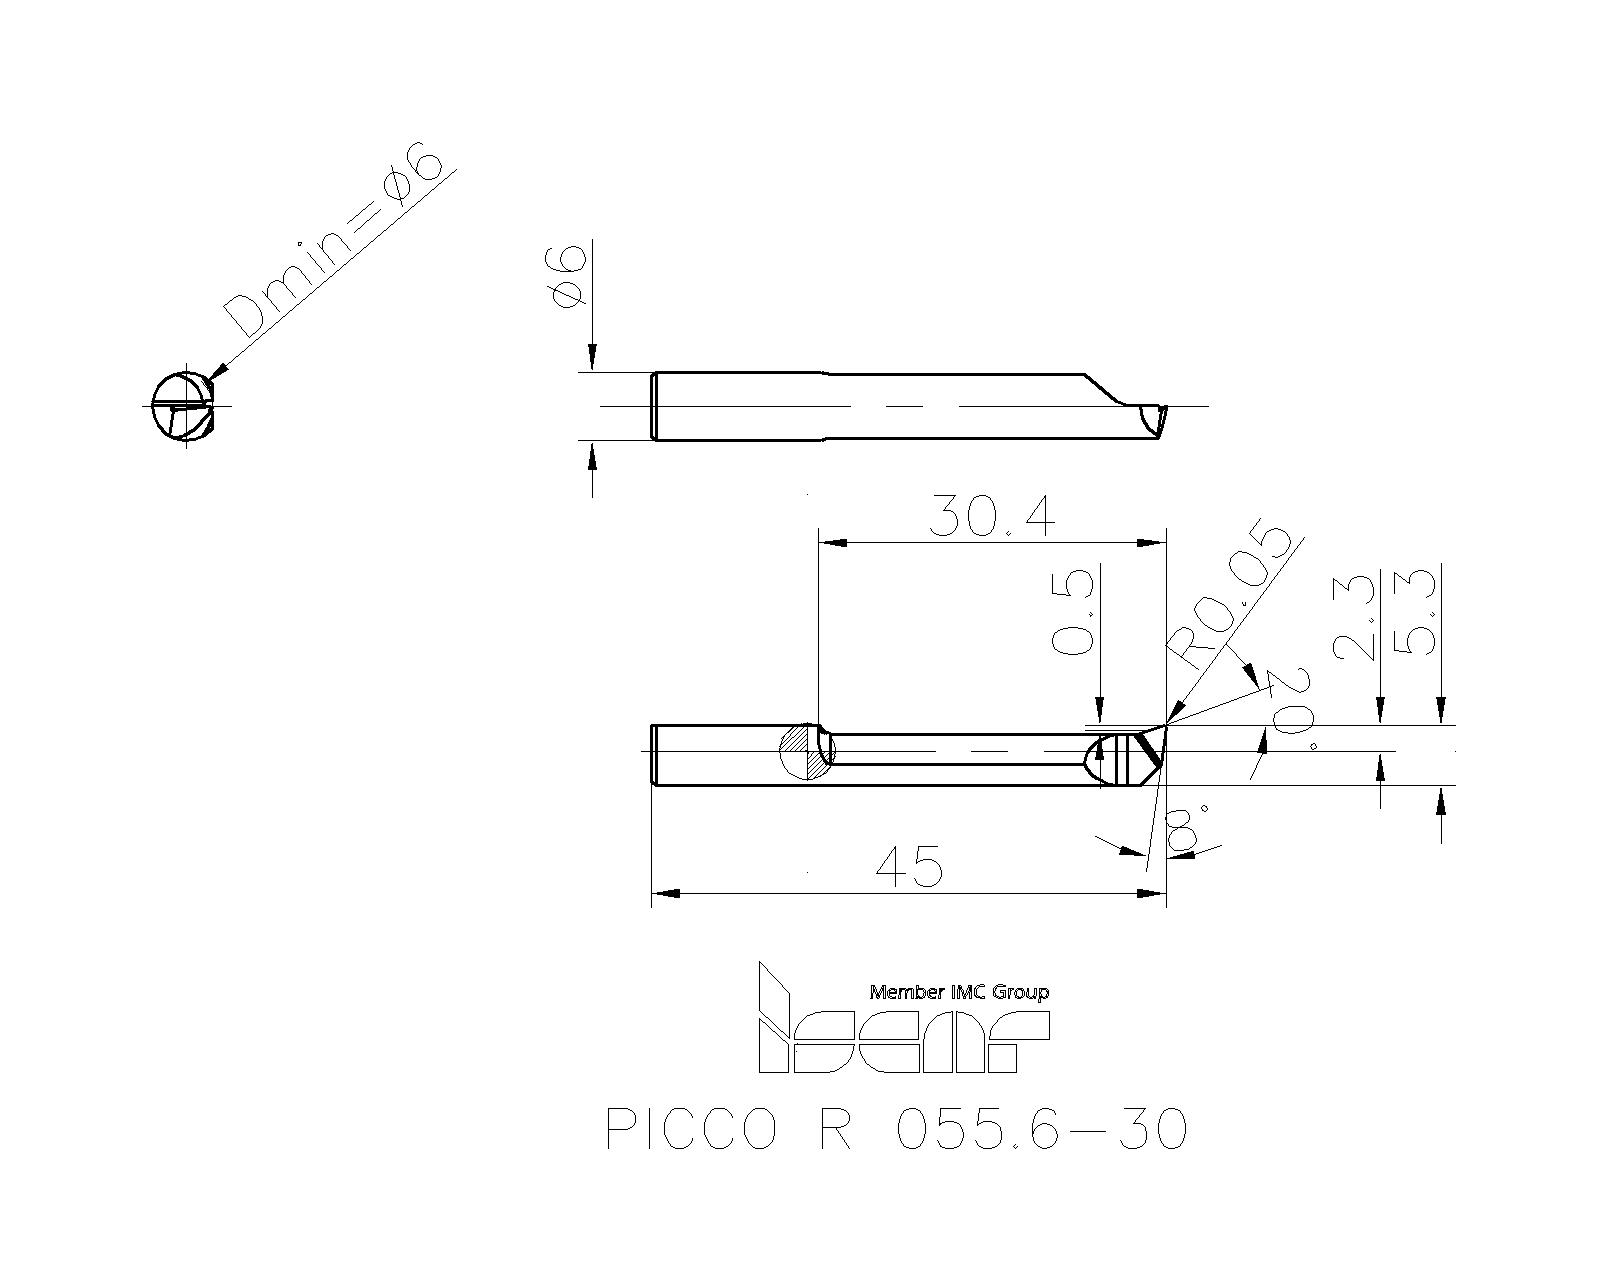 D ピコカット/チップ IC228 PICCO R 050.6-35 IC228 1個 1m2sO1m9s3, キッチン、日用品、文具 -  ammc.sa